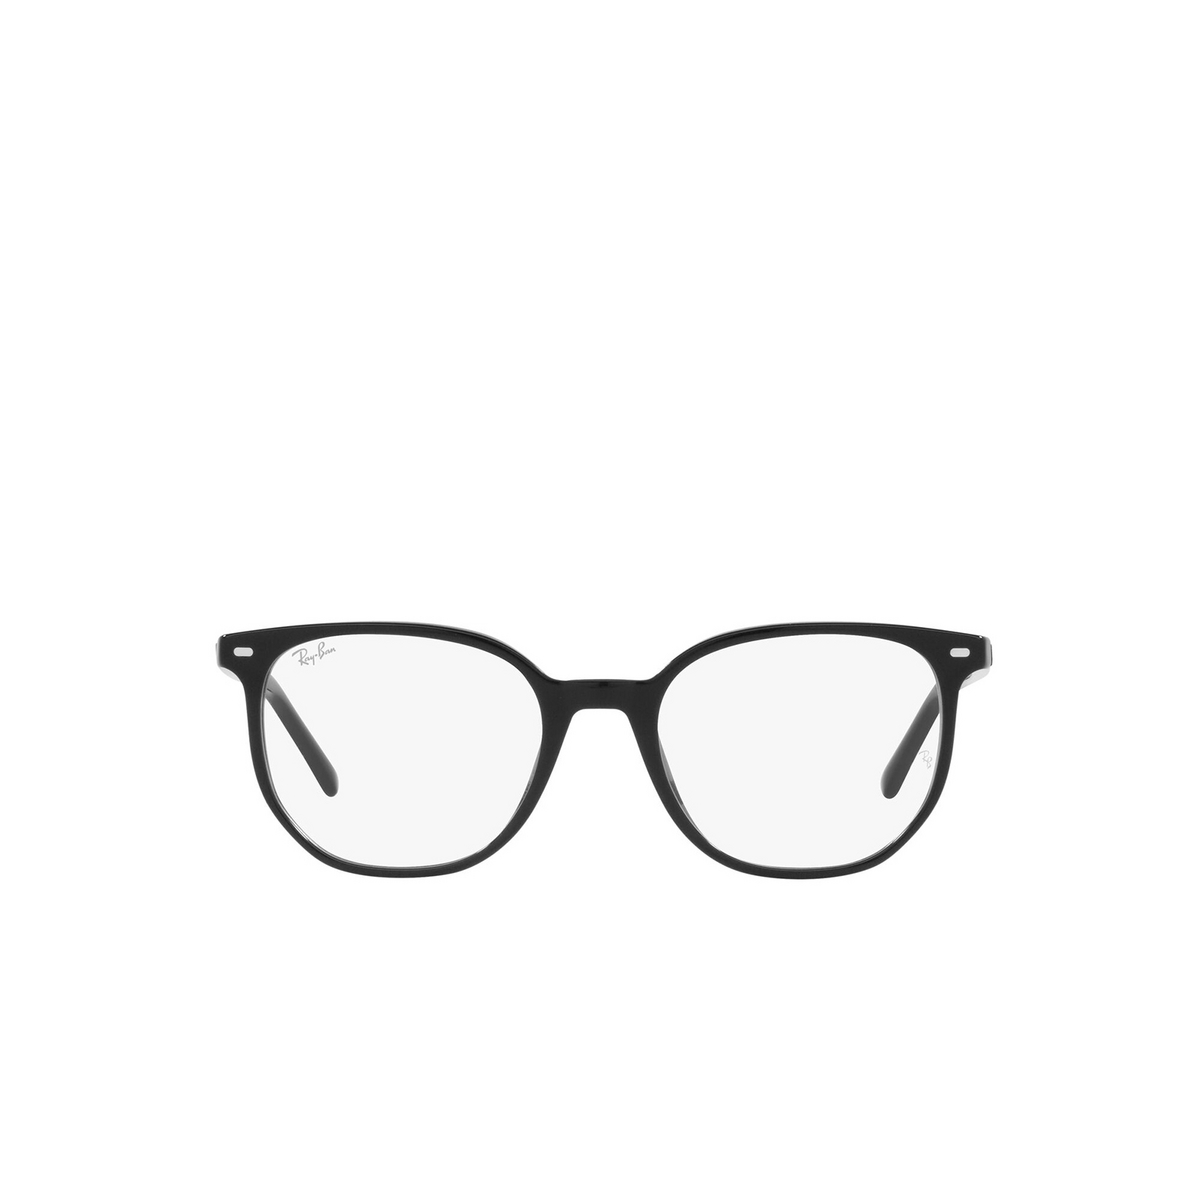 Ray-Ban® Irregular Eyeglasses: Elliot RX5397 color Black 2000 - front view.